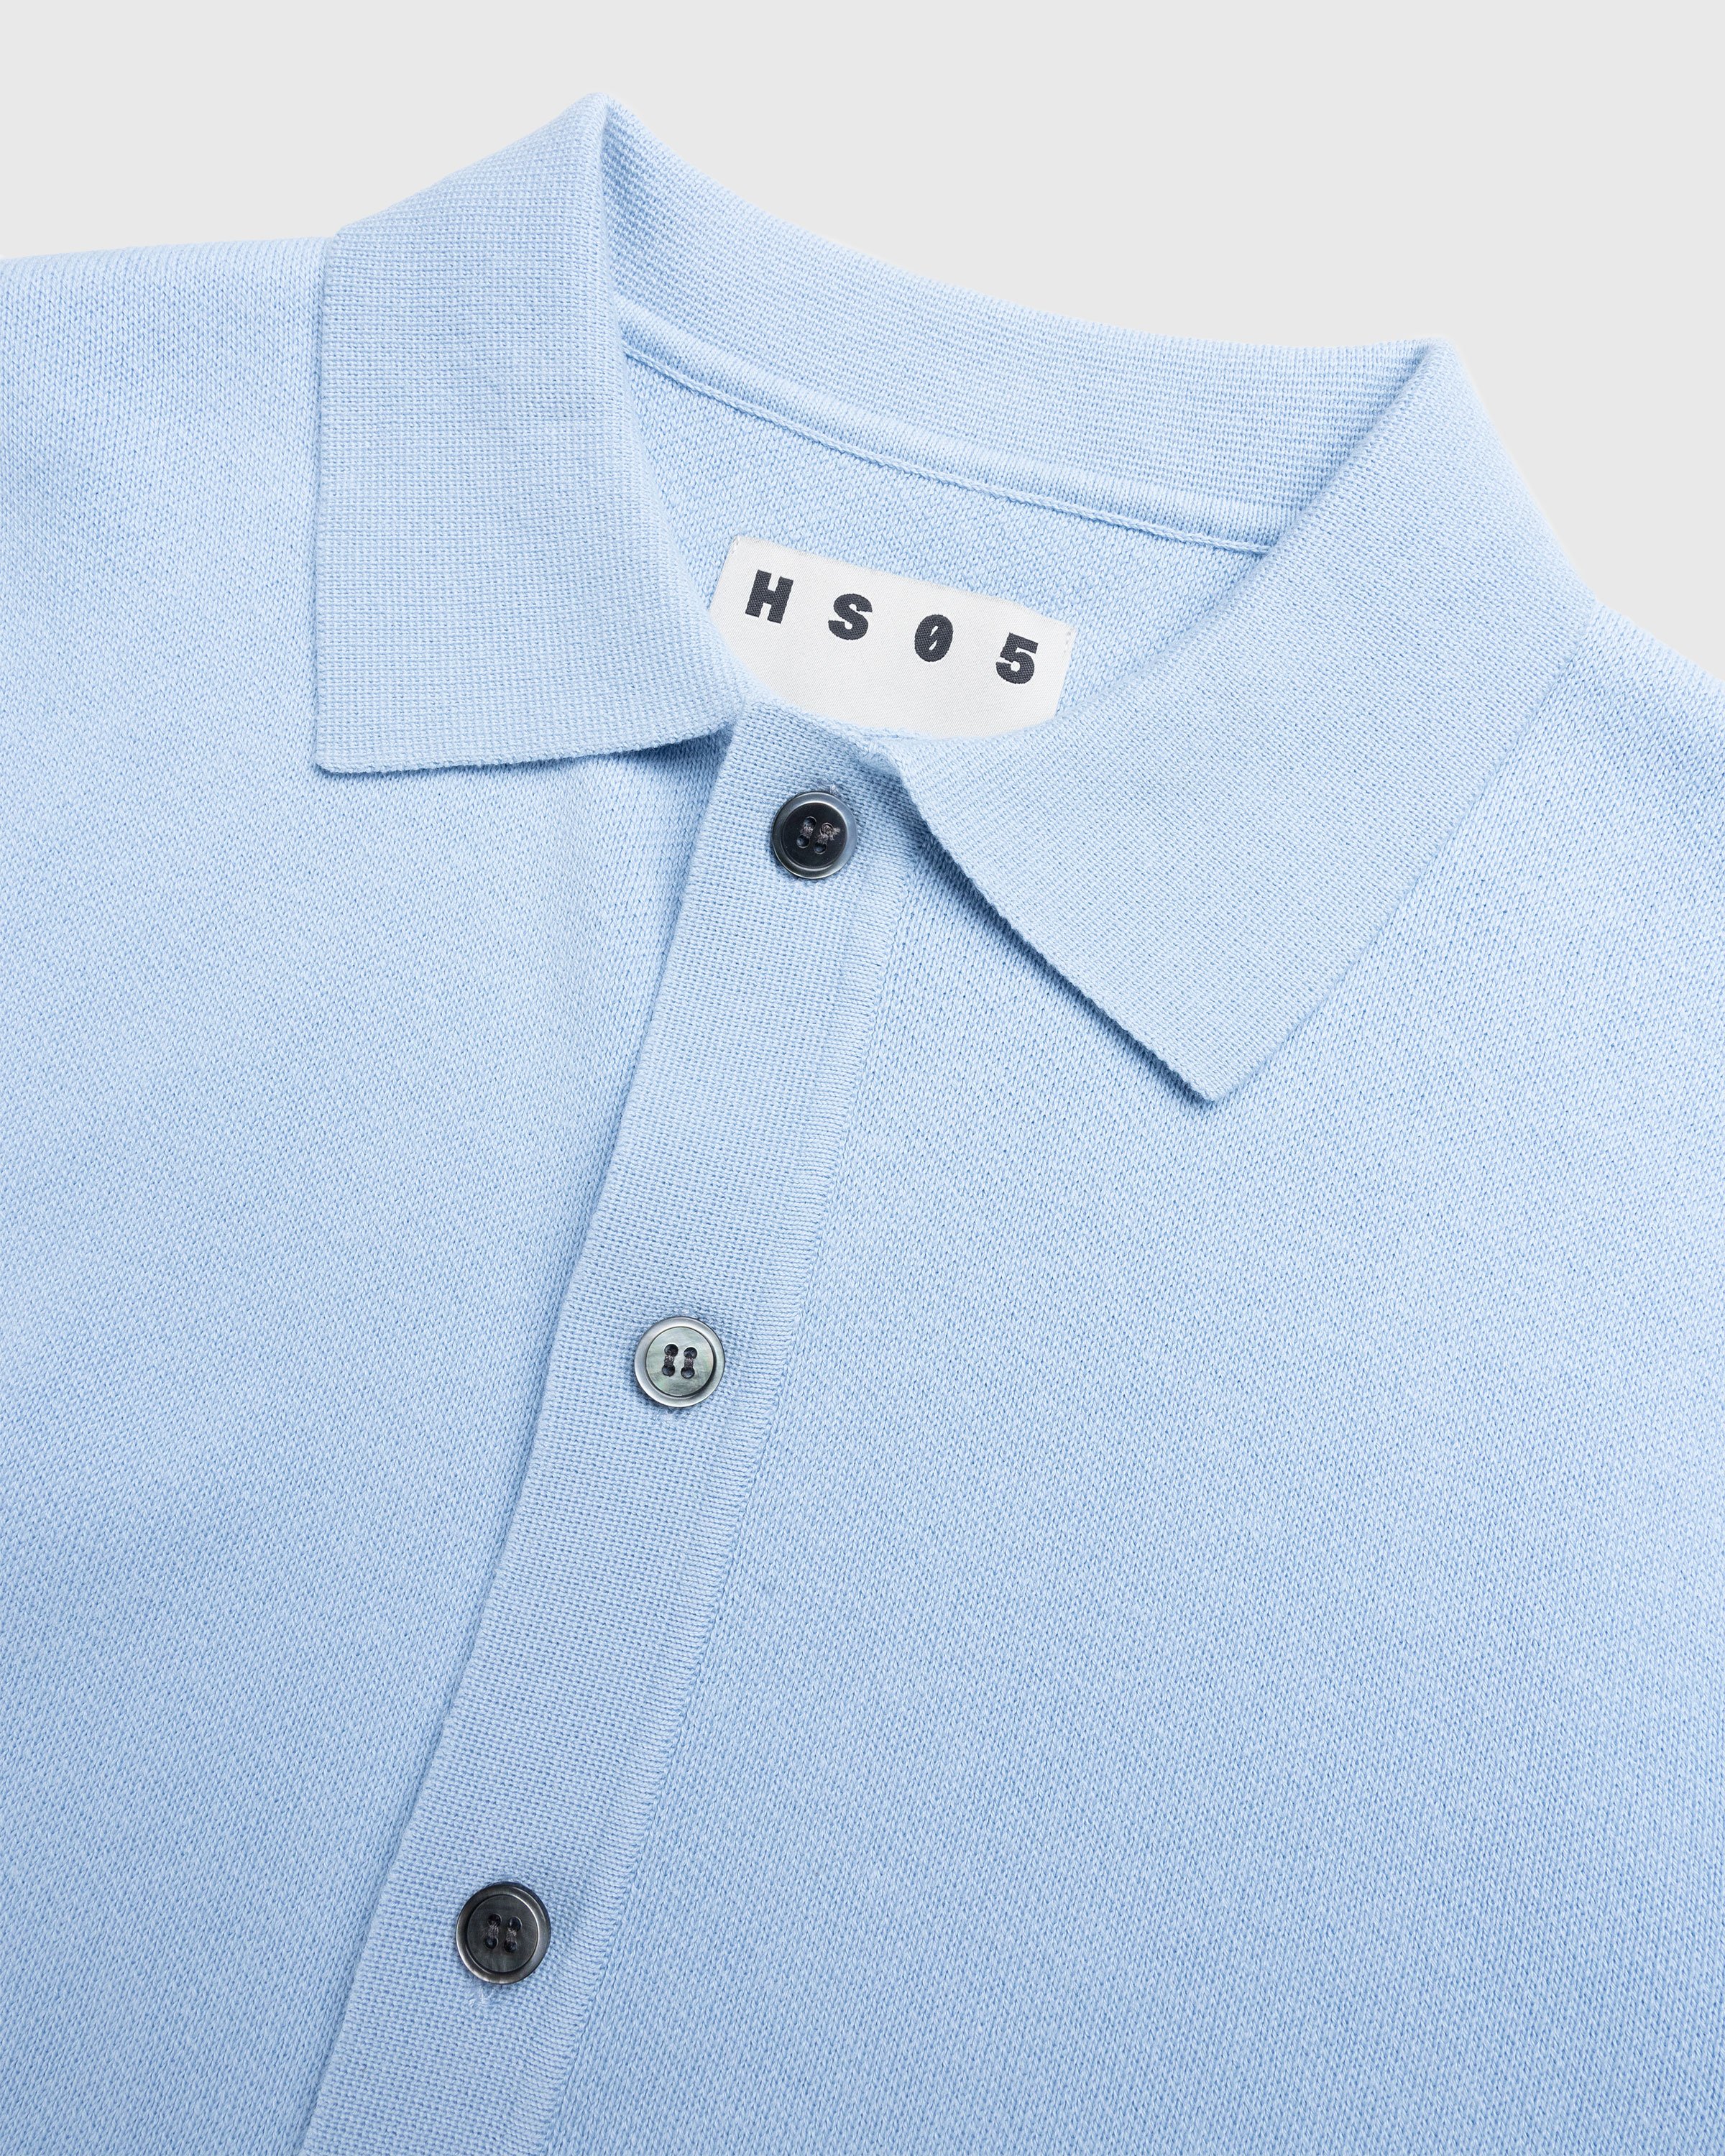 Highsnobiety HS05 - Cotton Knit Shirt Light blue - Clothing - Blue - Image 6